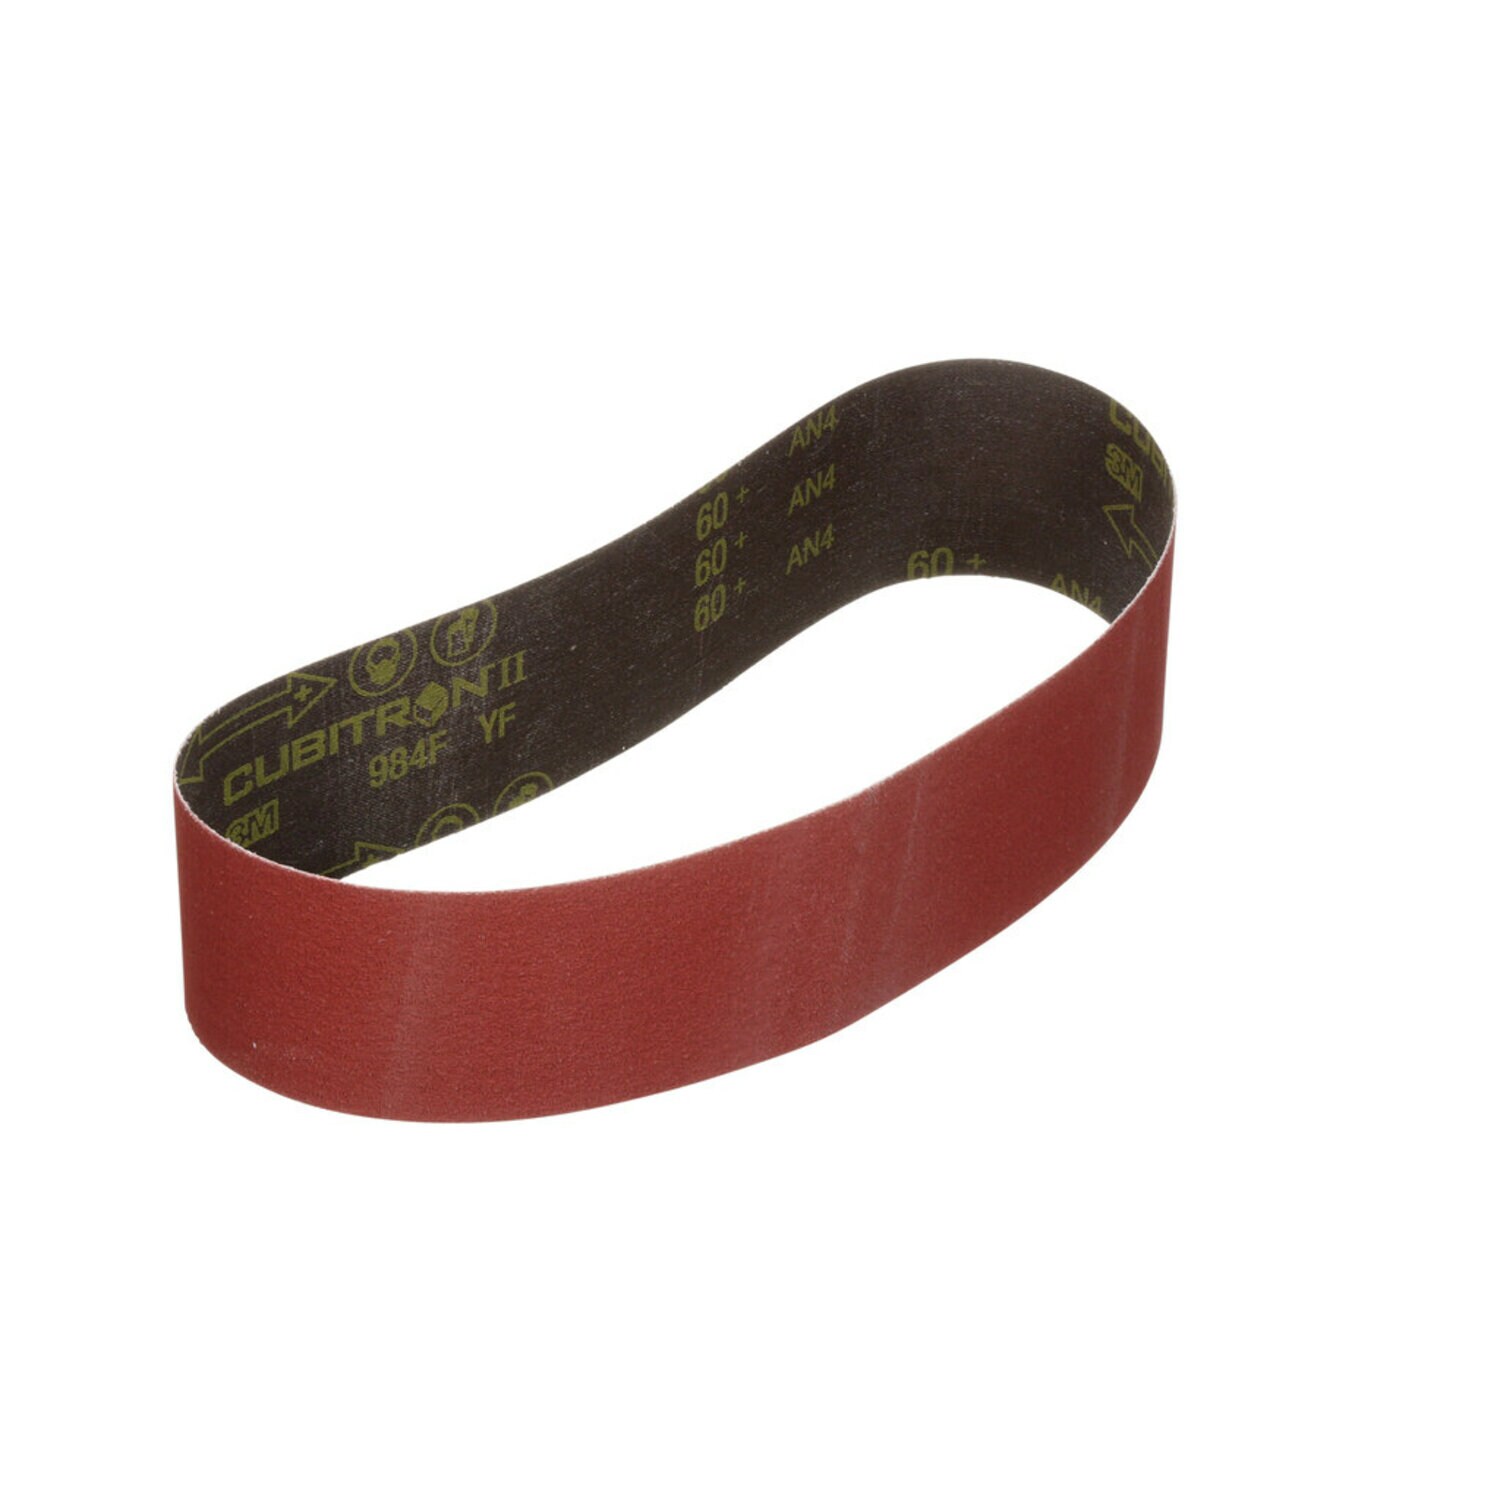 7010536328 - 3M Cubitron II Cloth Belt 984F, 36+ YF-weight, 8 in x 60 in, Film-lok,
Single-flex